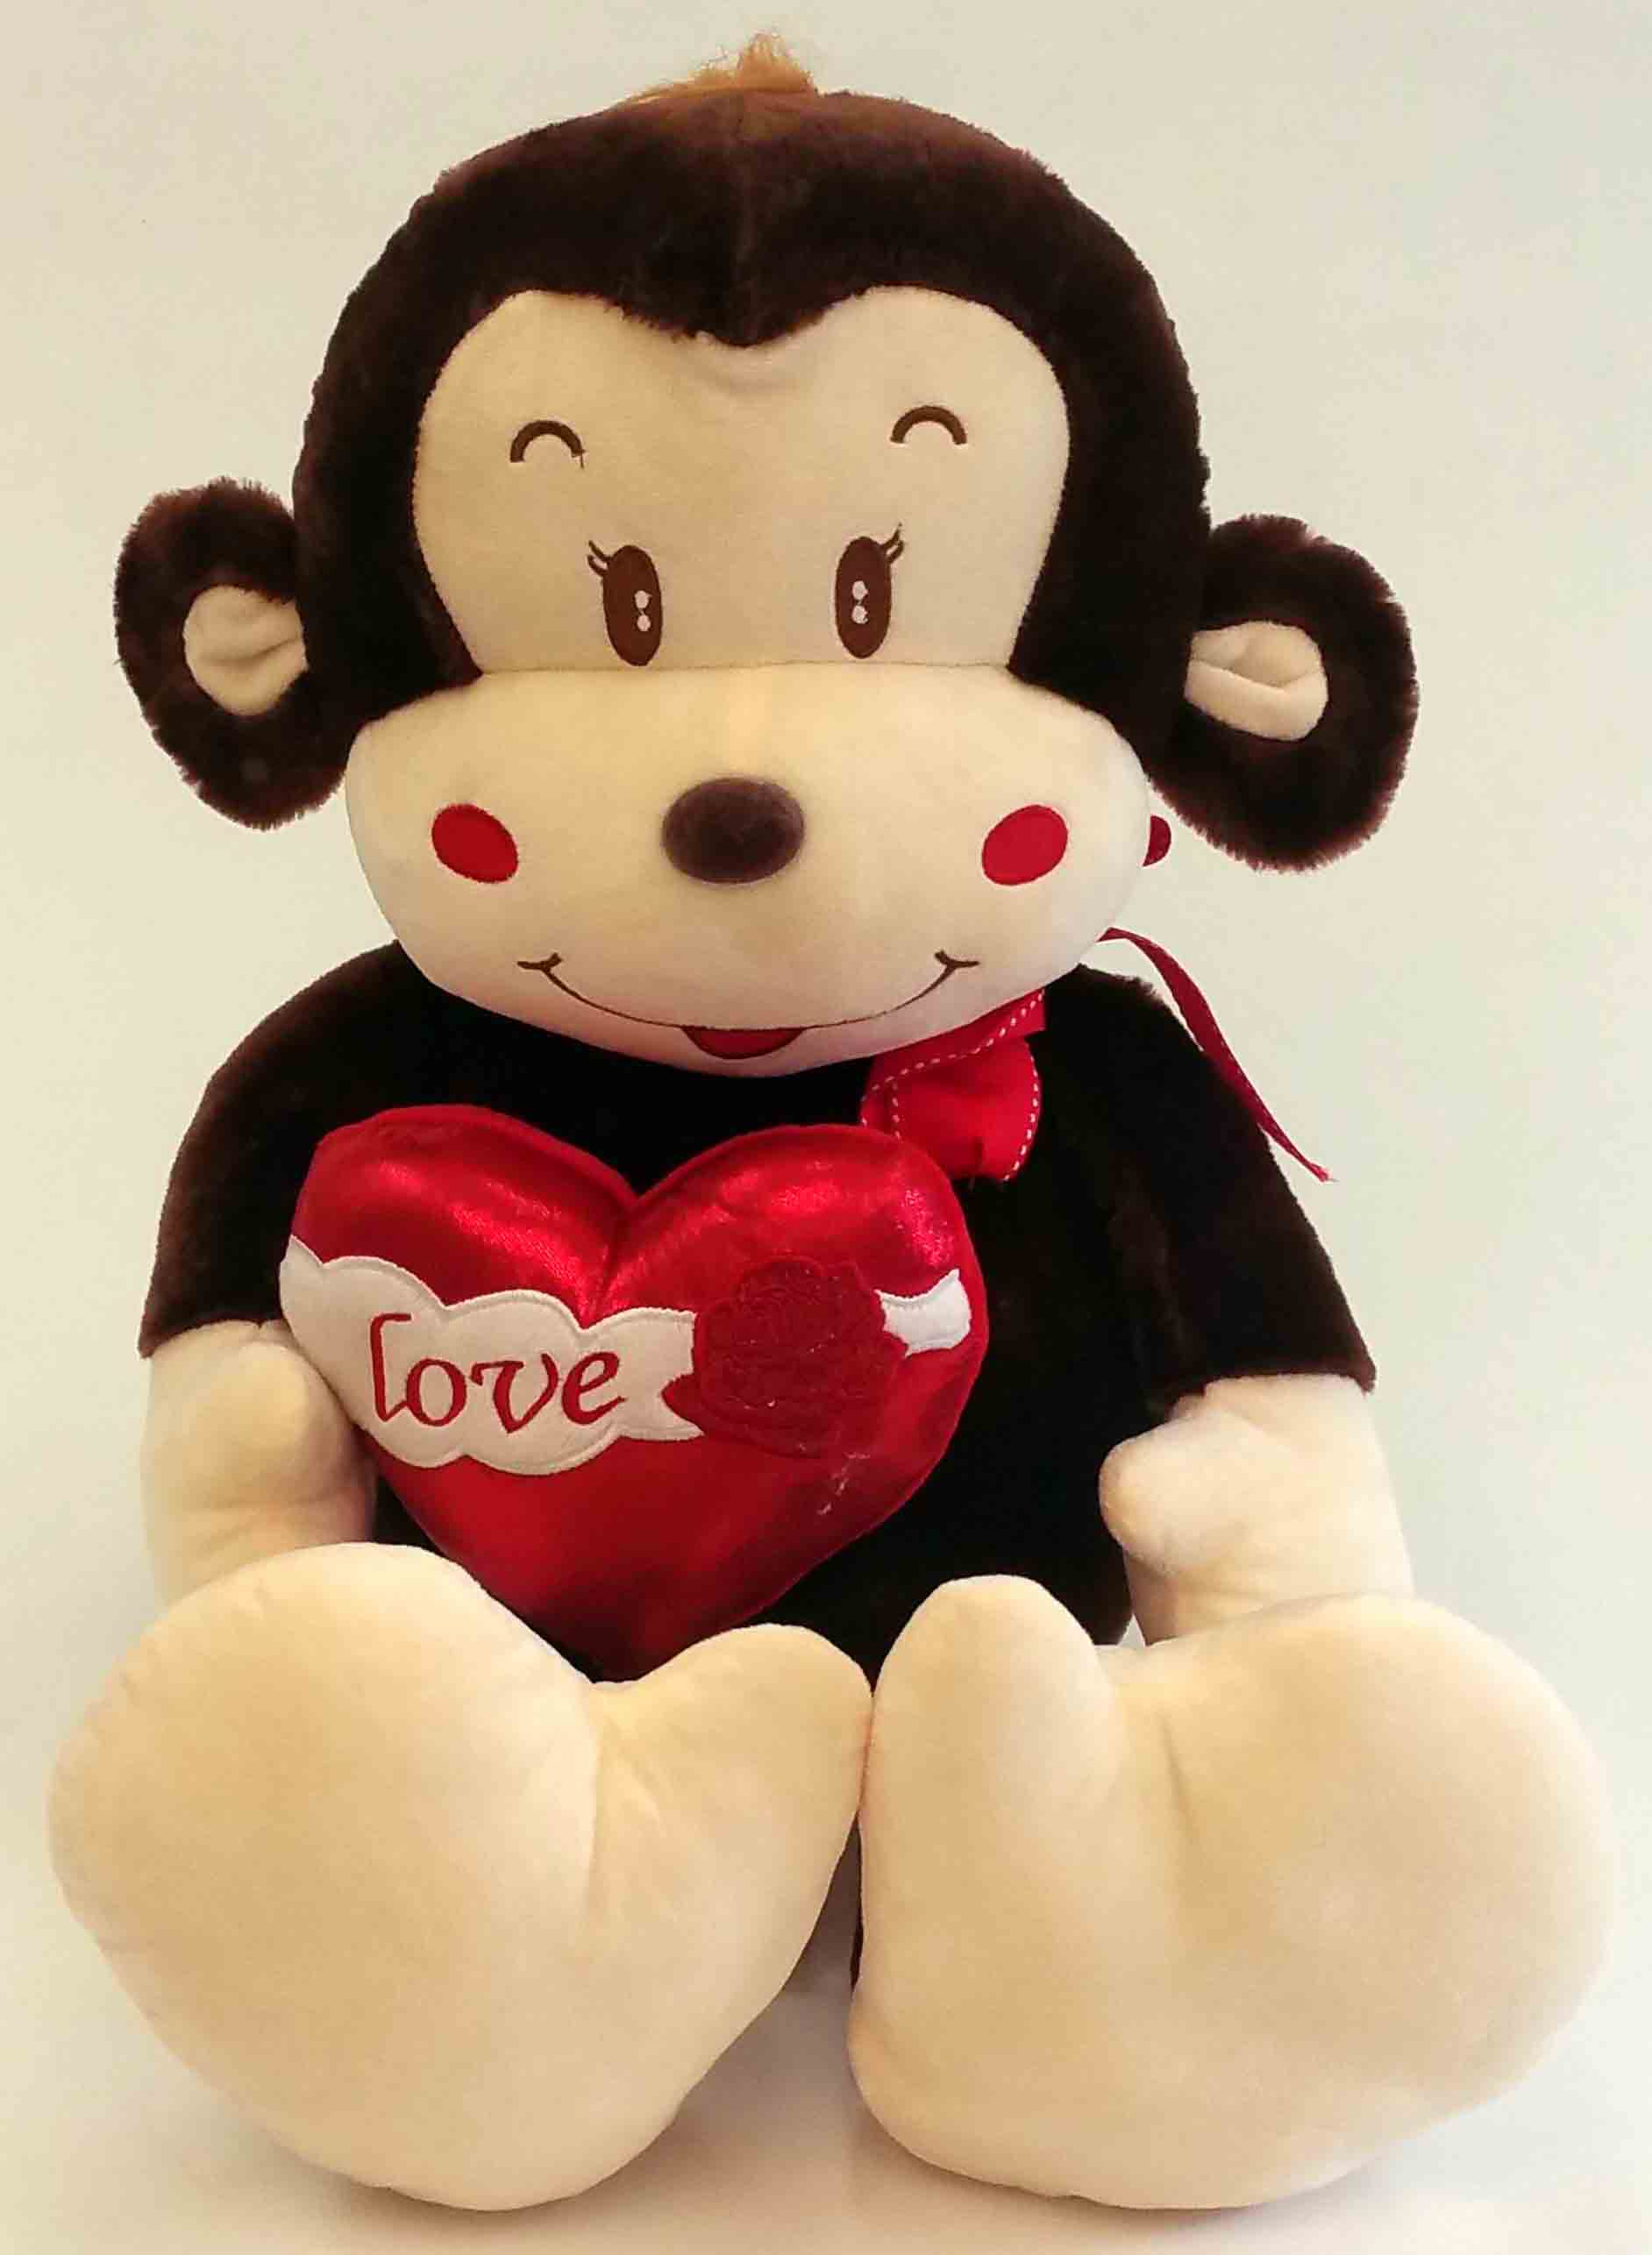 P902 - 30" Plush Monkey with Love Heart - 33.95 ea